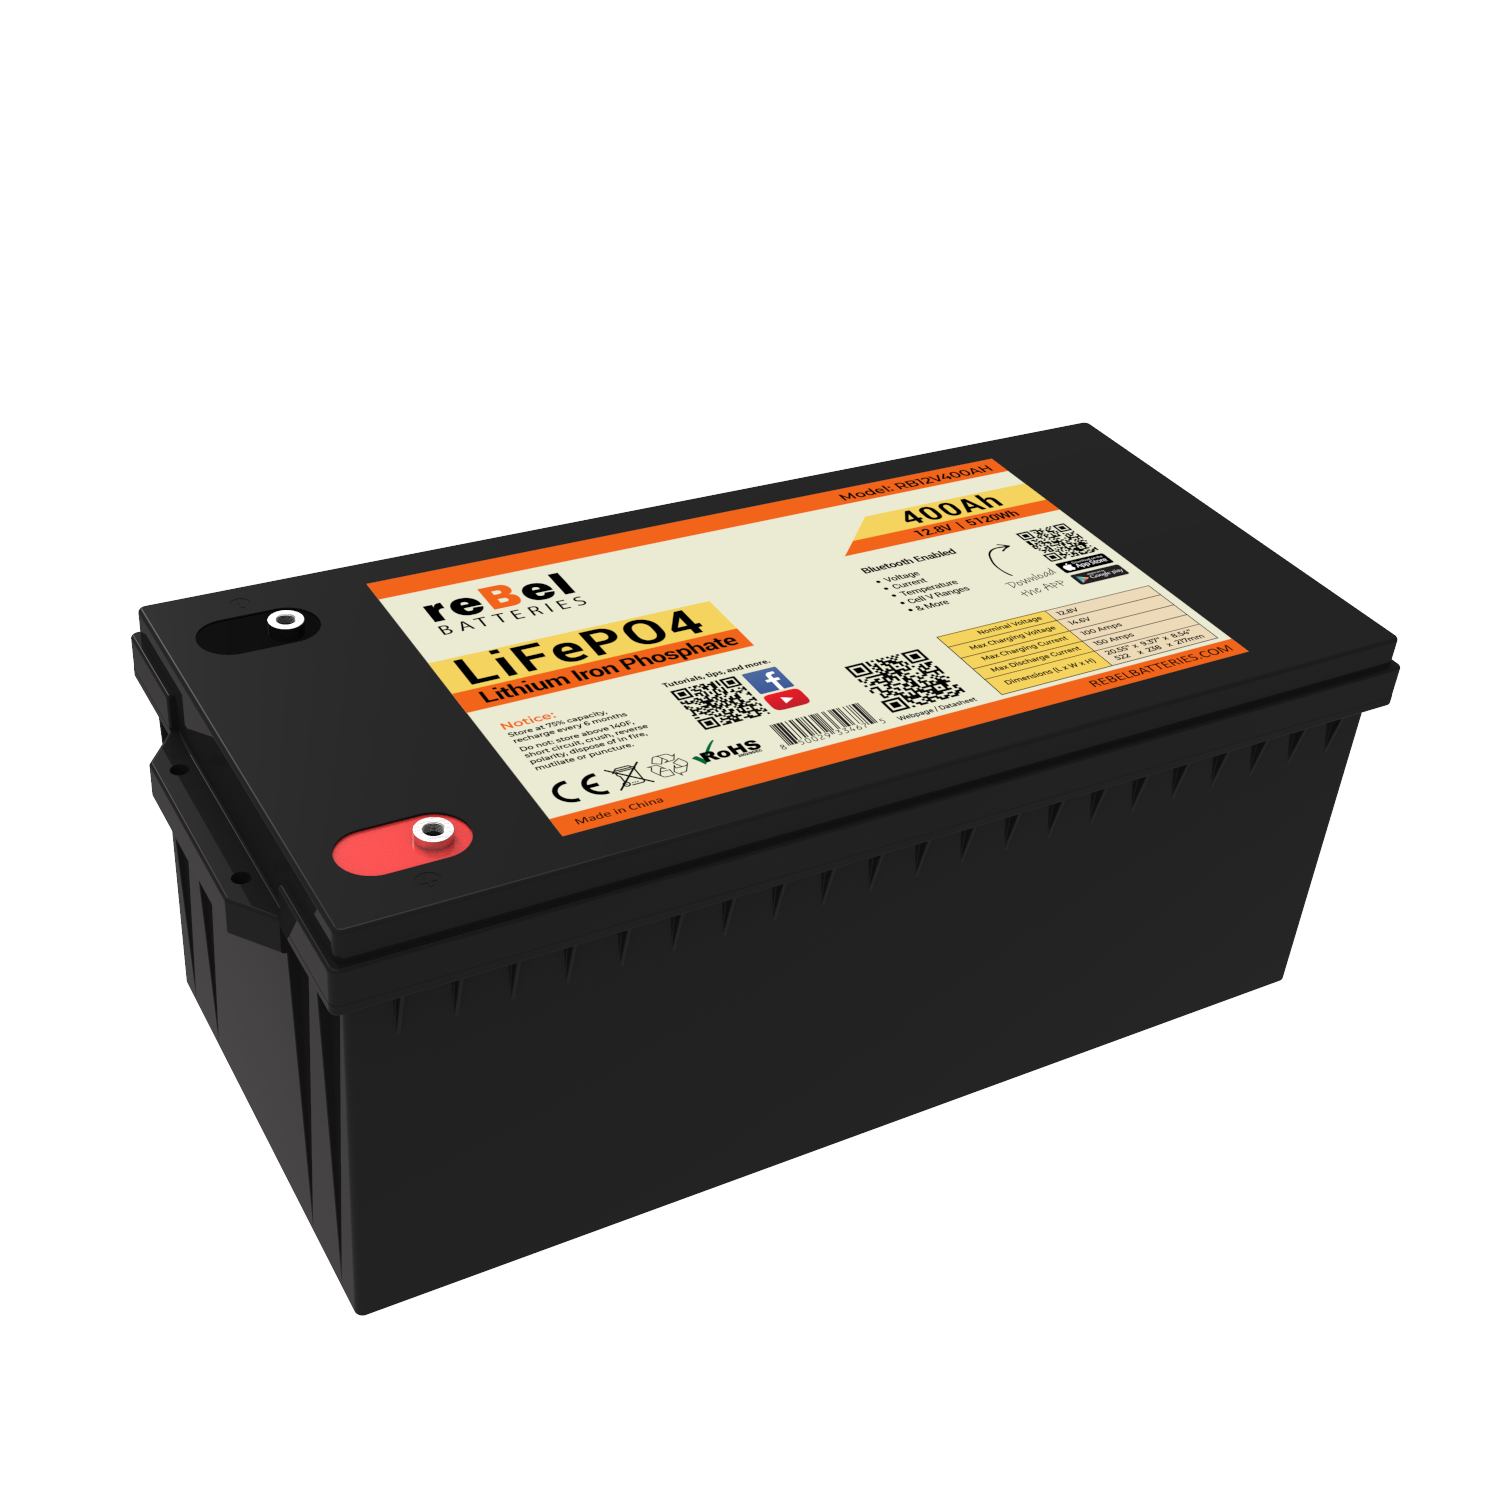 GBS 12V 400Ah LFP400AHA-B prismatic lifepo4 battery - LiFePO4 Battery